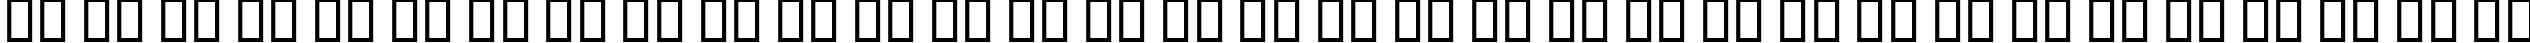 Пример написания русского алфавита шрифтом B Shadi